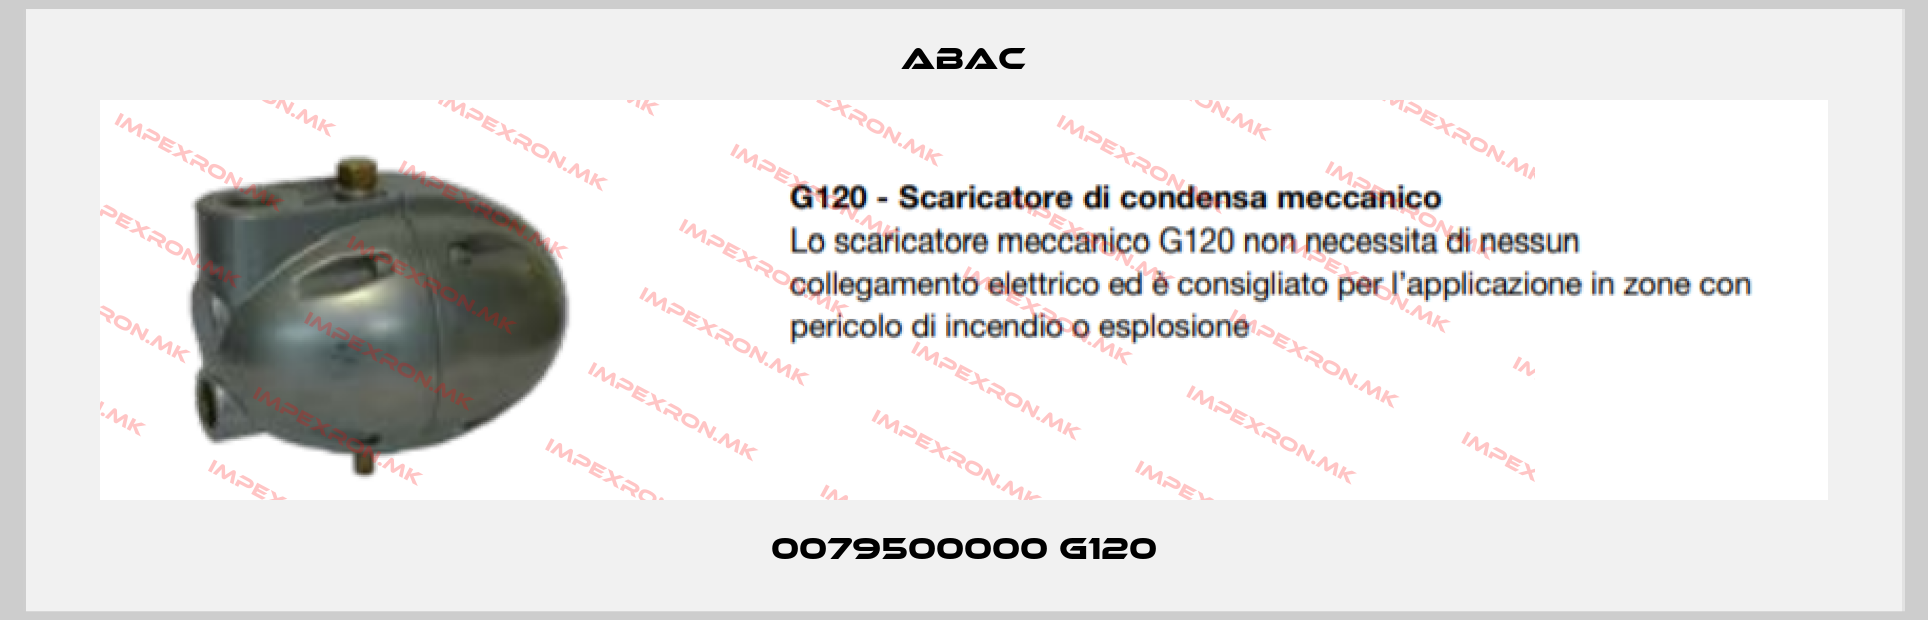 ABAC-0079500000 G120price